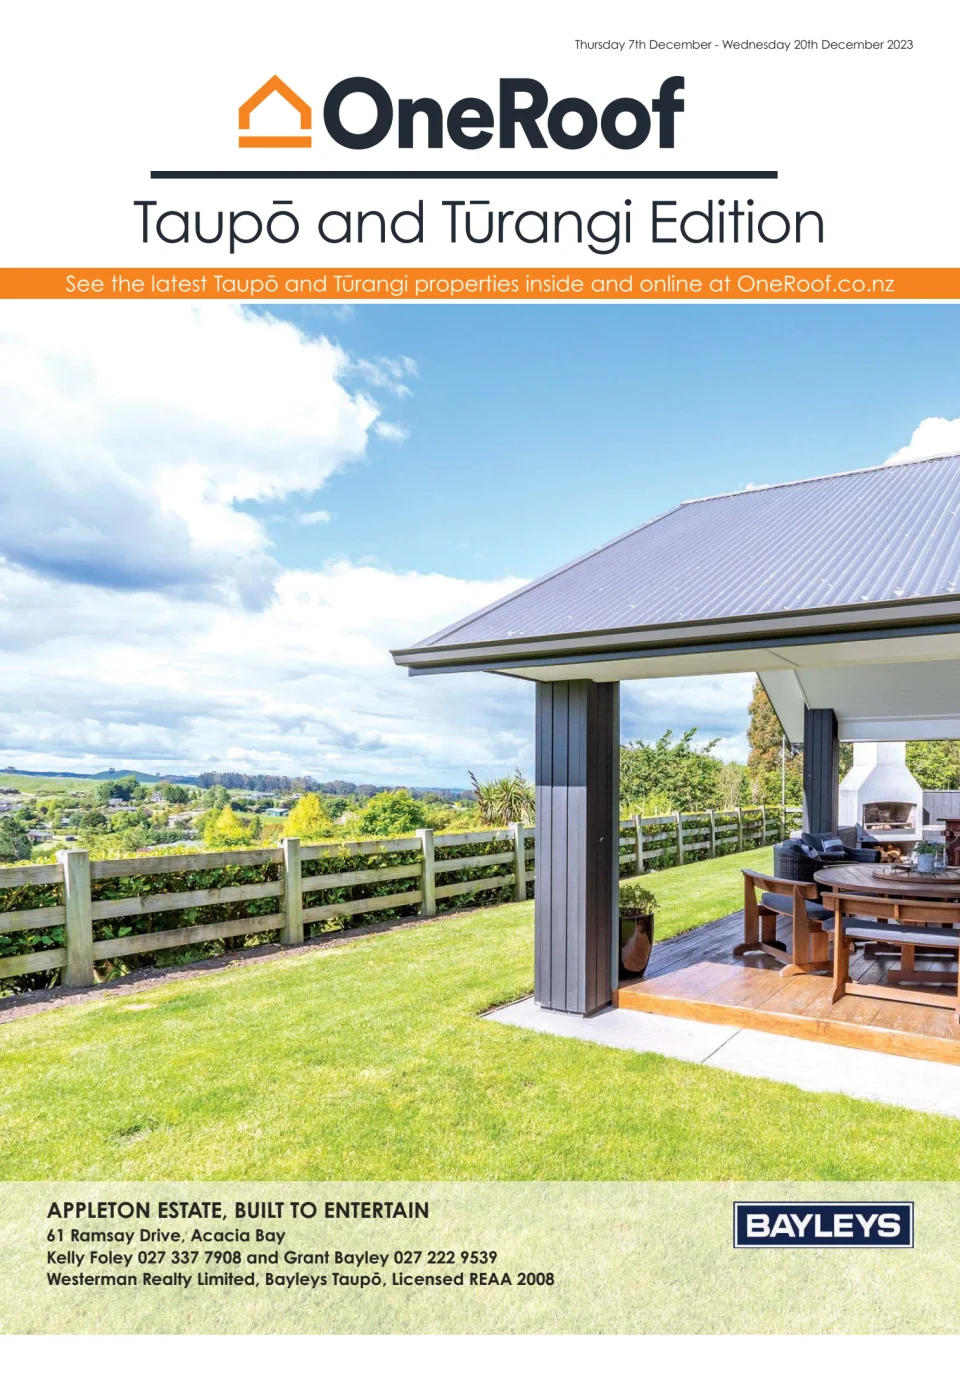 Taupo & Turangi Herald - Property Guide